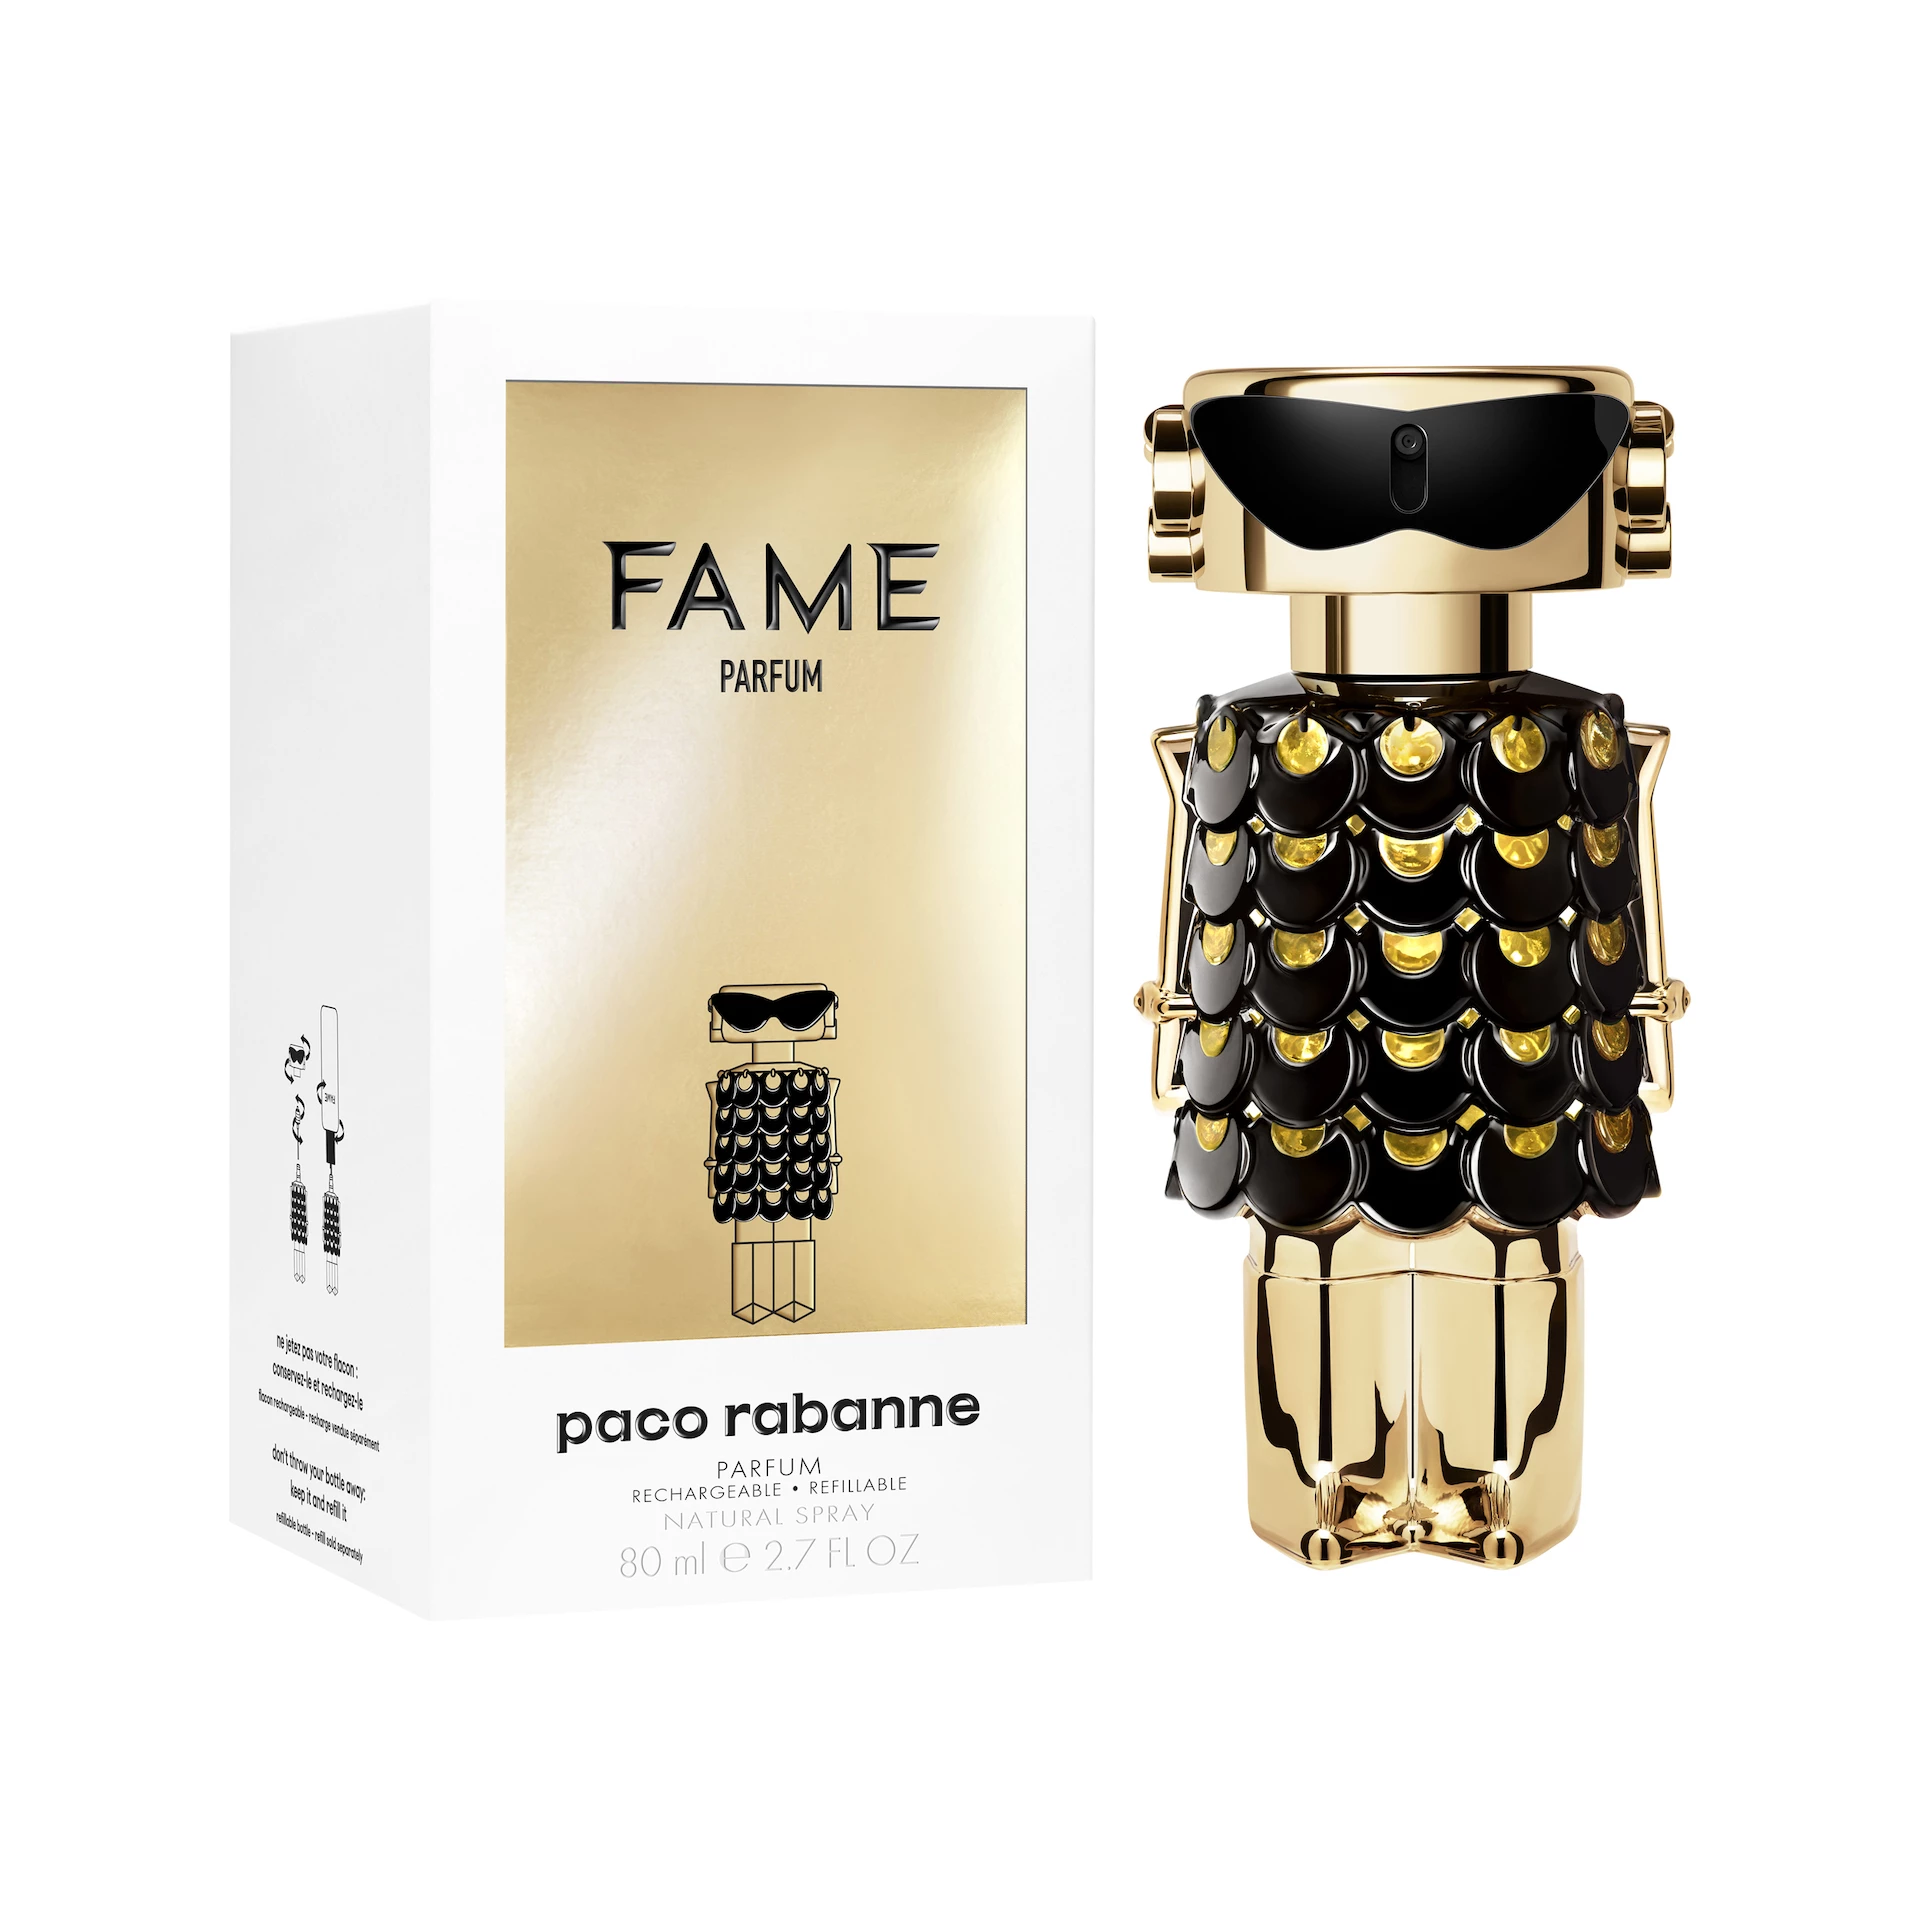 Paco Rabanne Fame Parfum 80 ml - 2